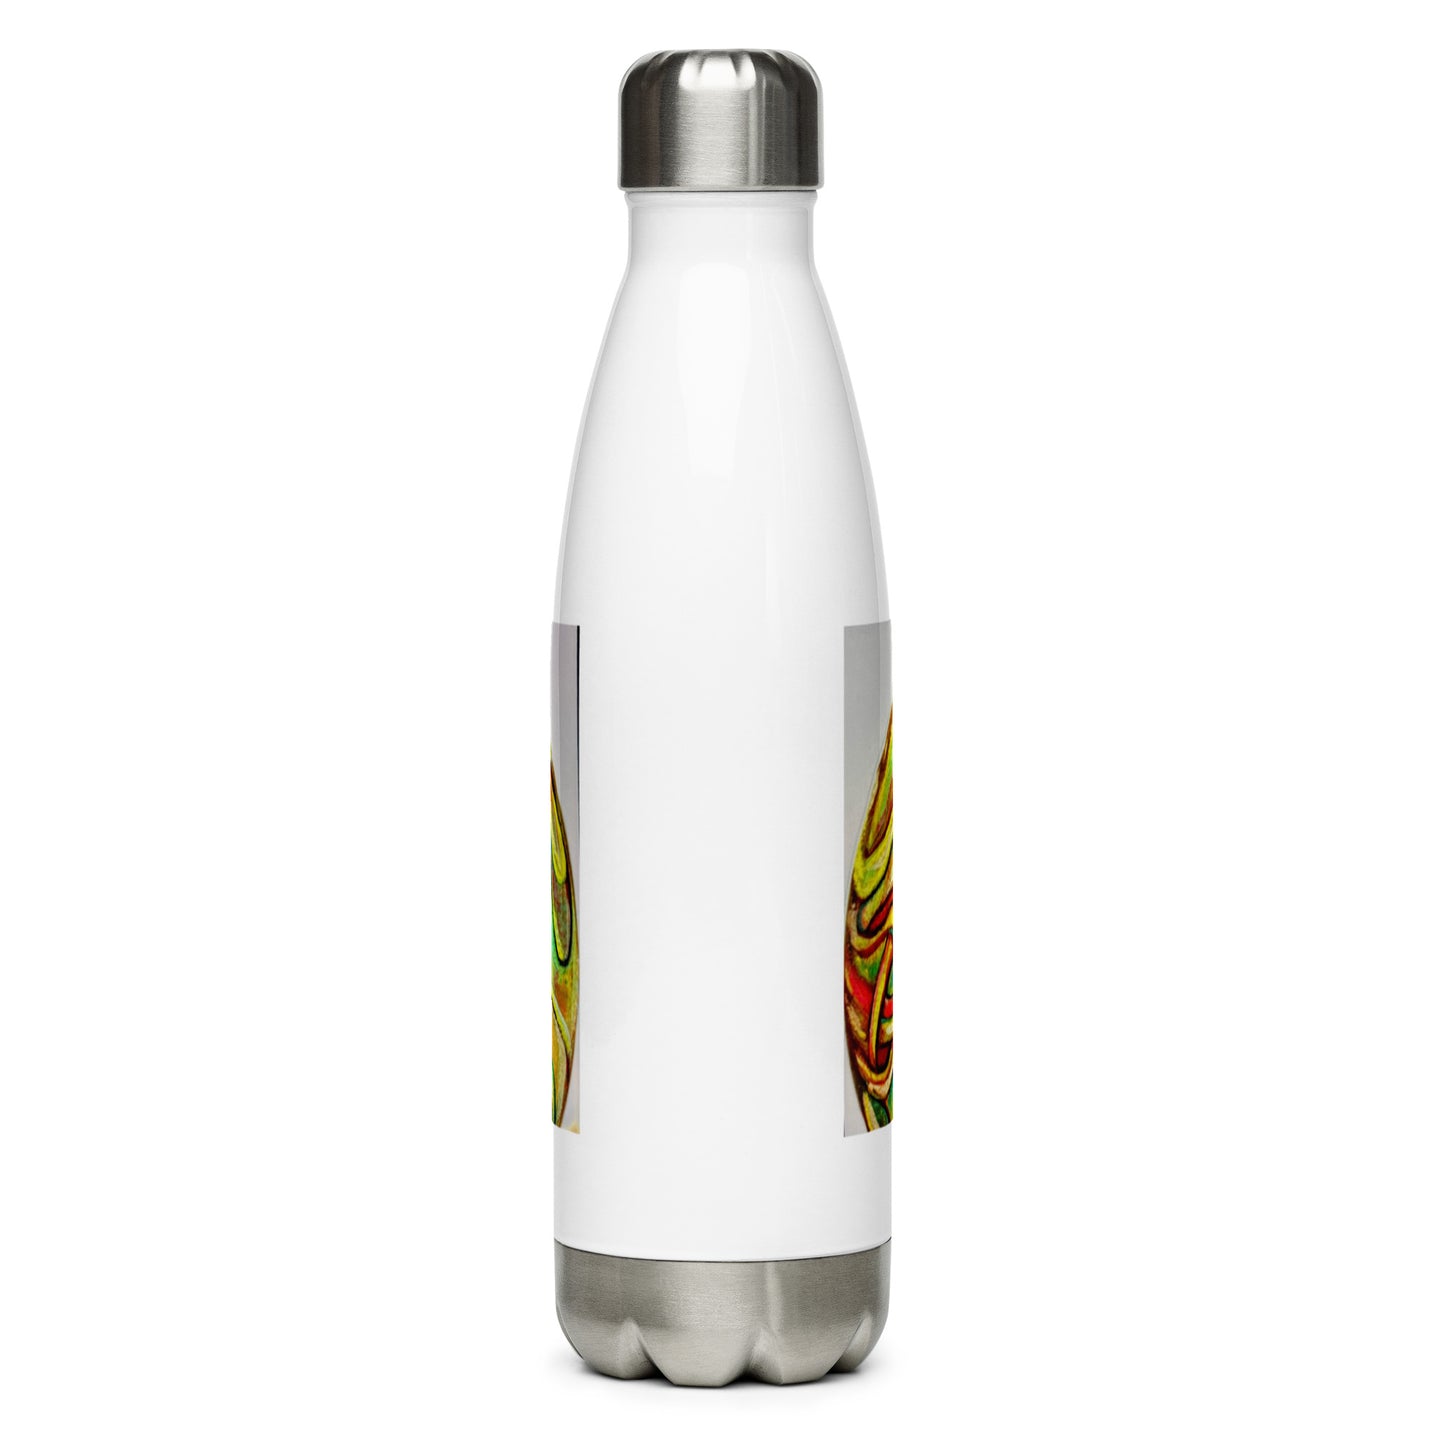 2 Schnarr Stainless Steel Water Bottle